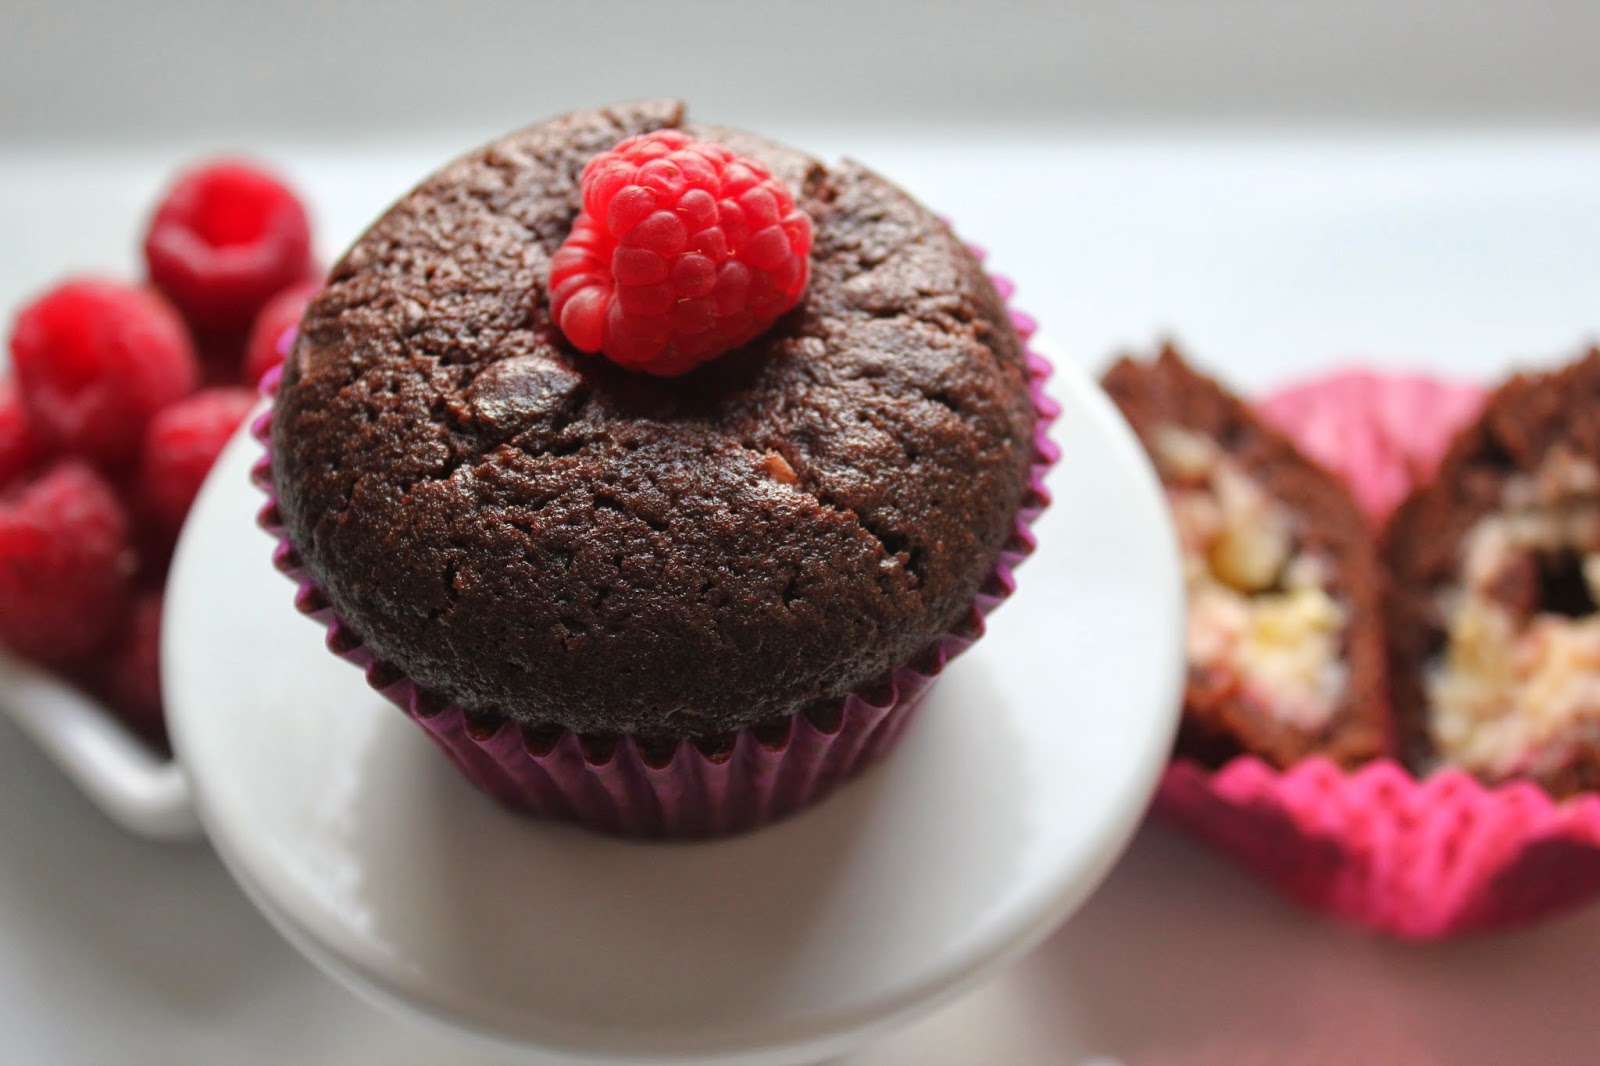 Chocolate-raspberry cheesecake muffin with raspberries and cut-open muffin